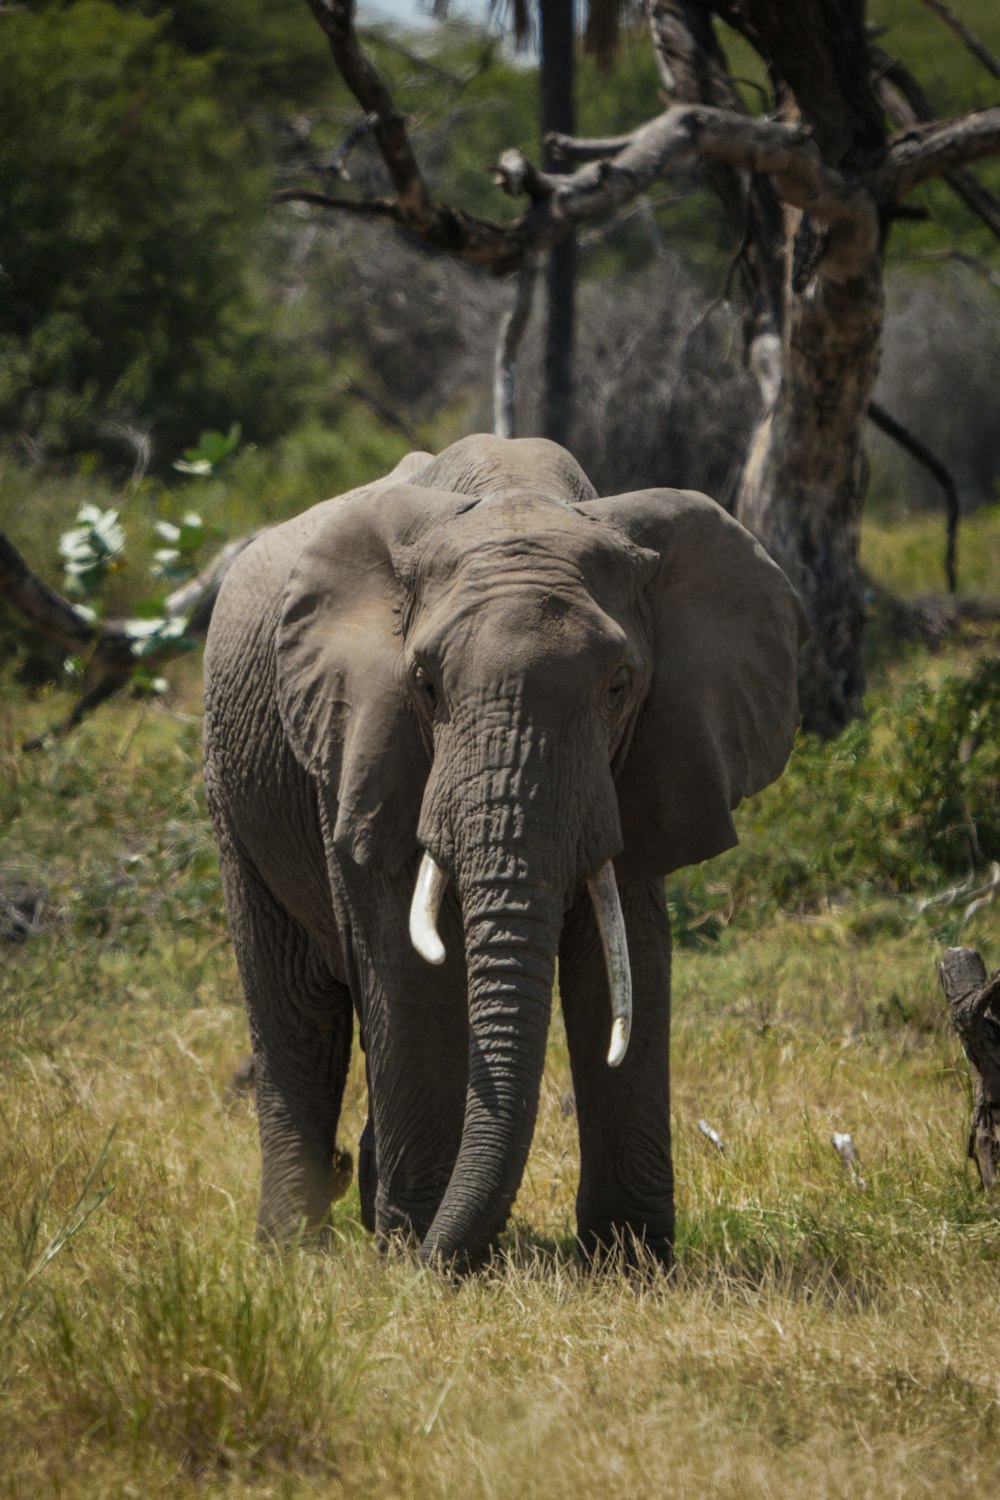 an elephant is walking through a grassy field